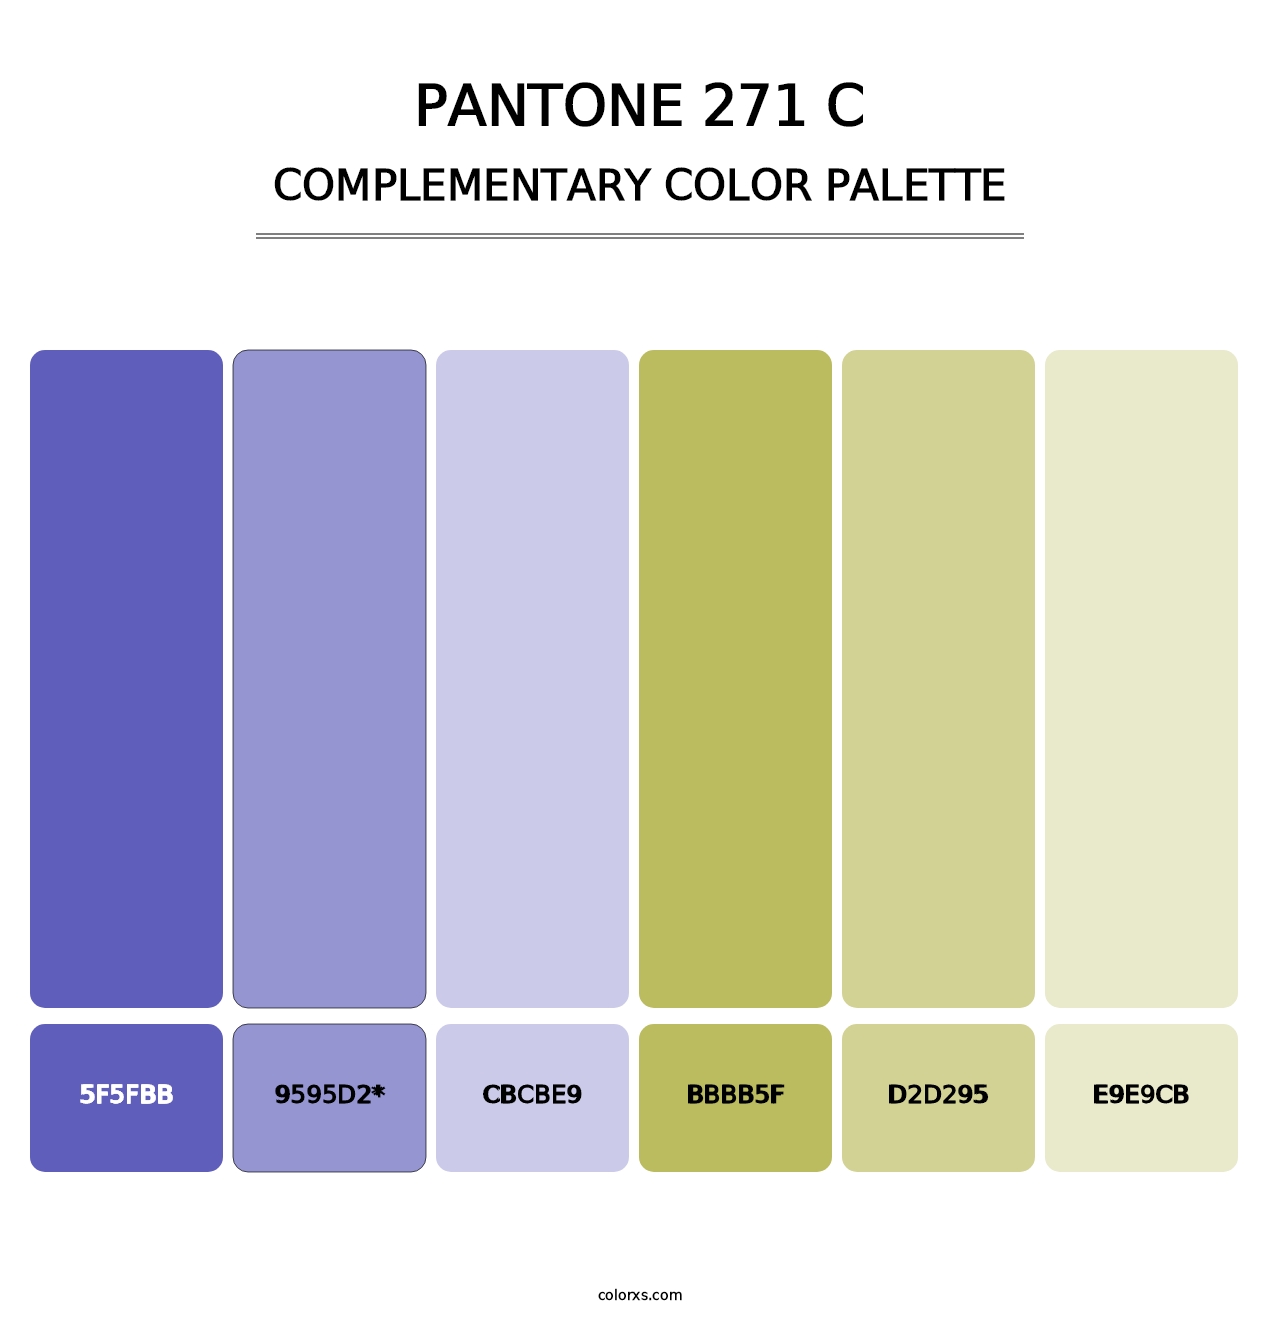 PANTONE 271 C - Complementary Color Palette